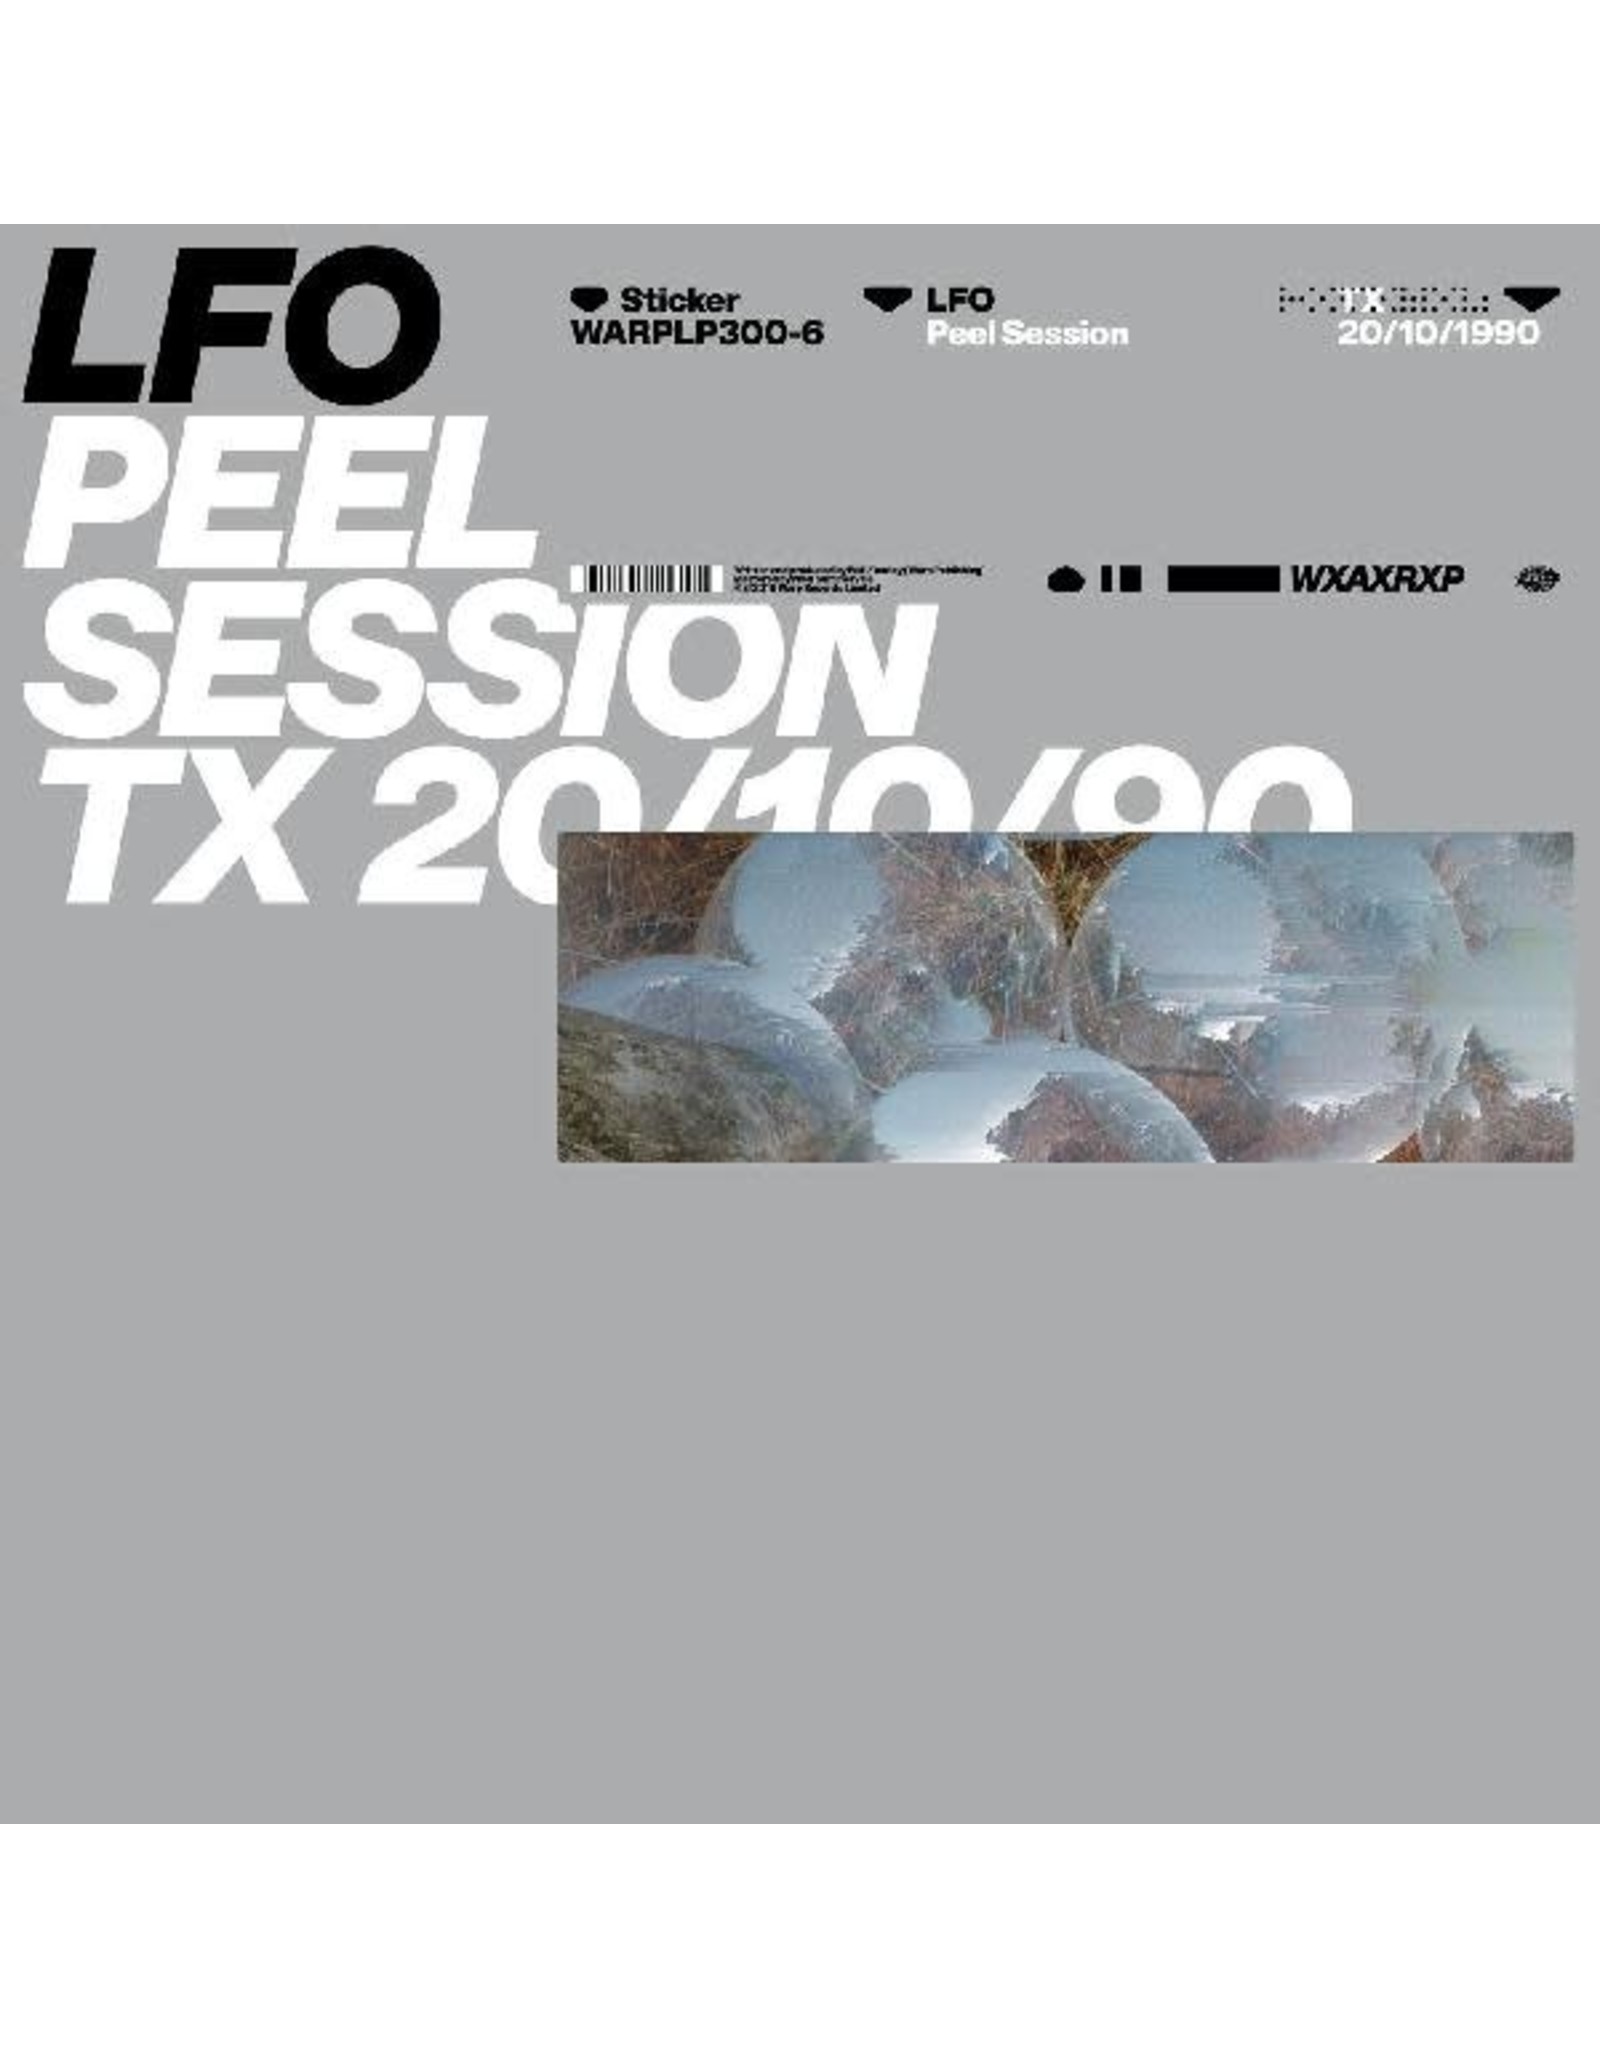 New Vinyl LFO - Peel Session LP